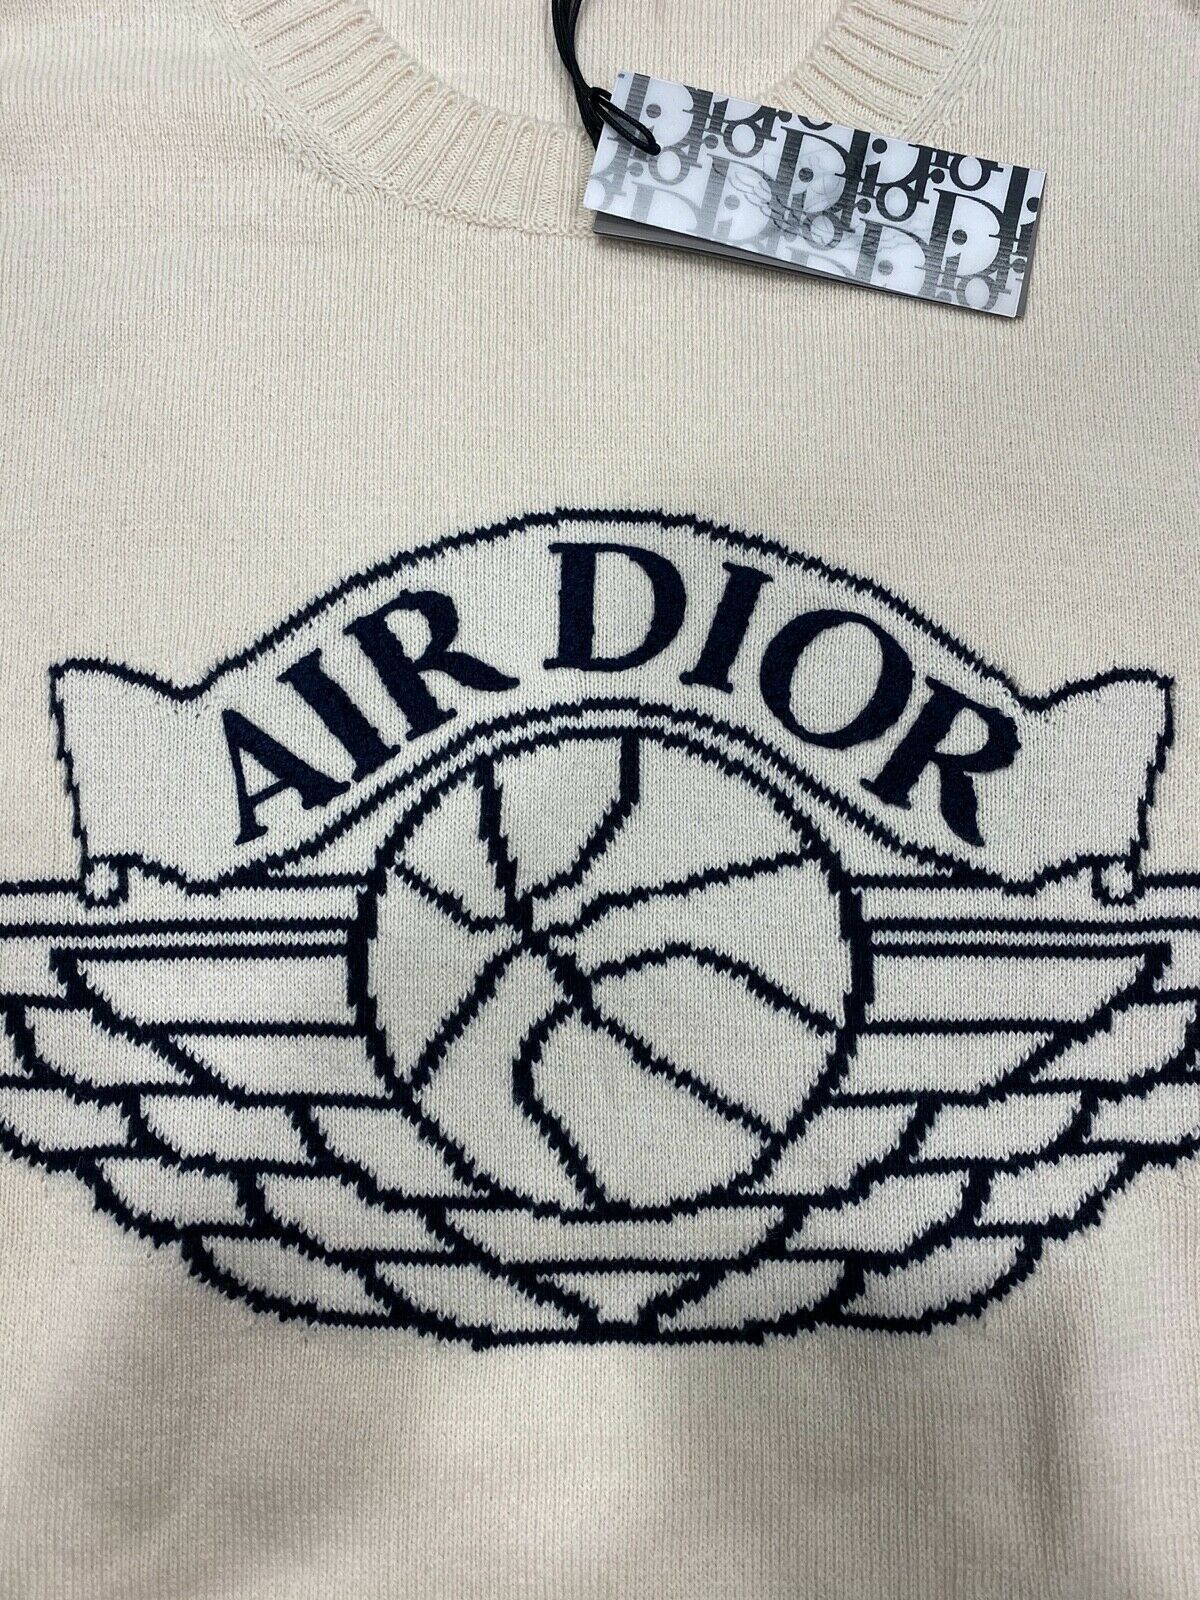 Dior Air Dior Jordan Wings Logo Cashmere Long Sleeve Jumper XL Size US XL / EU 56 / 4 - 5 Thumbnail